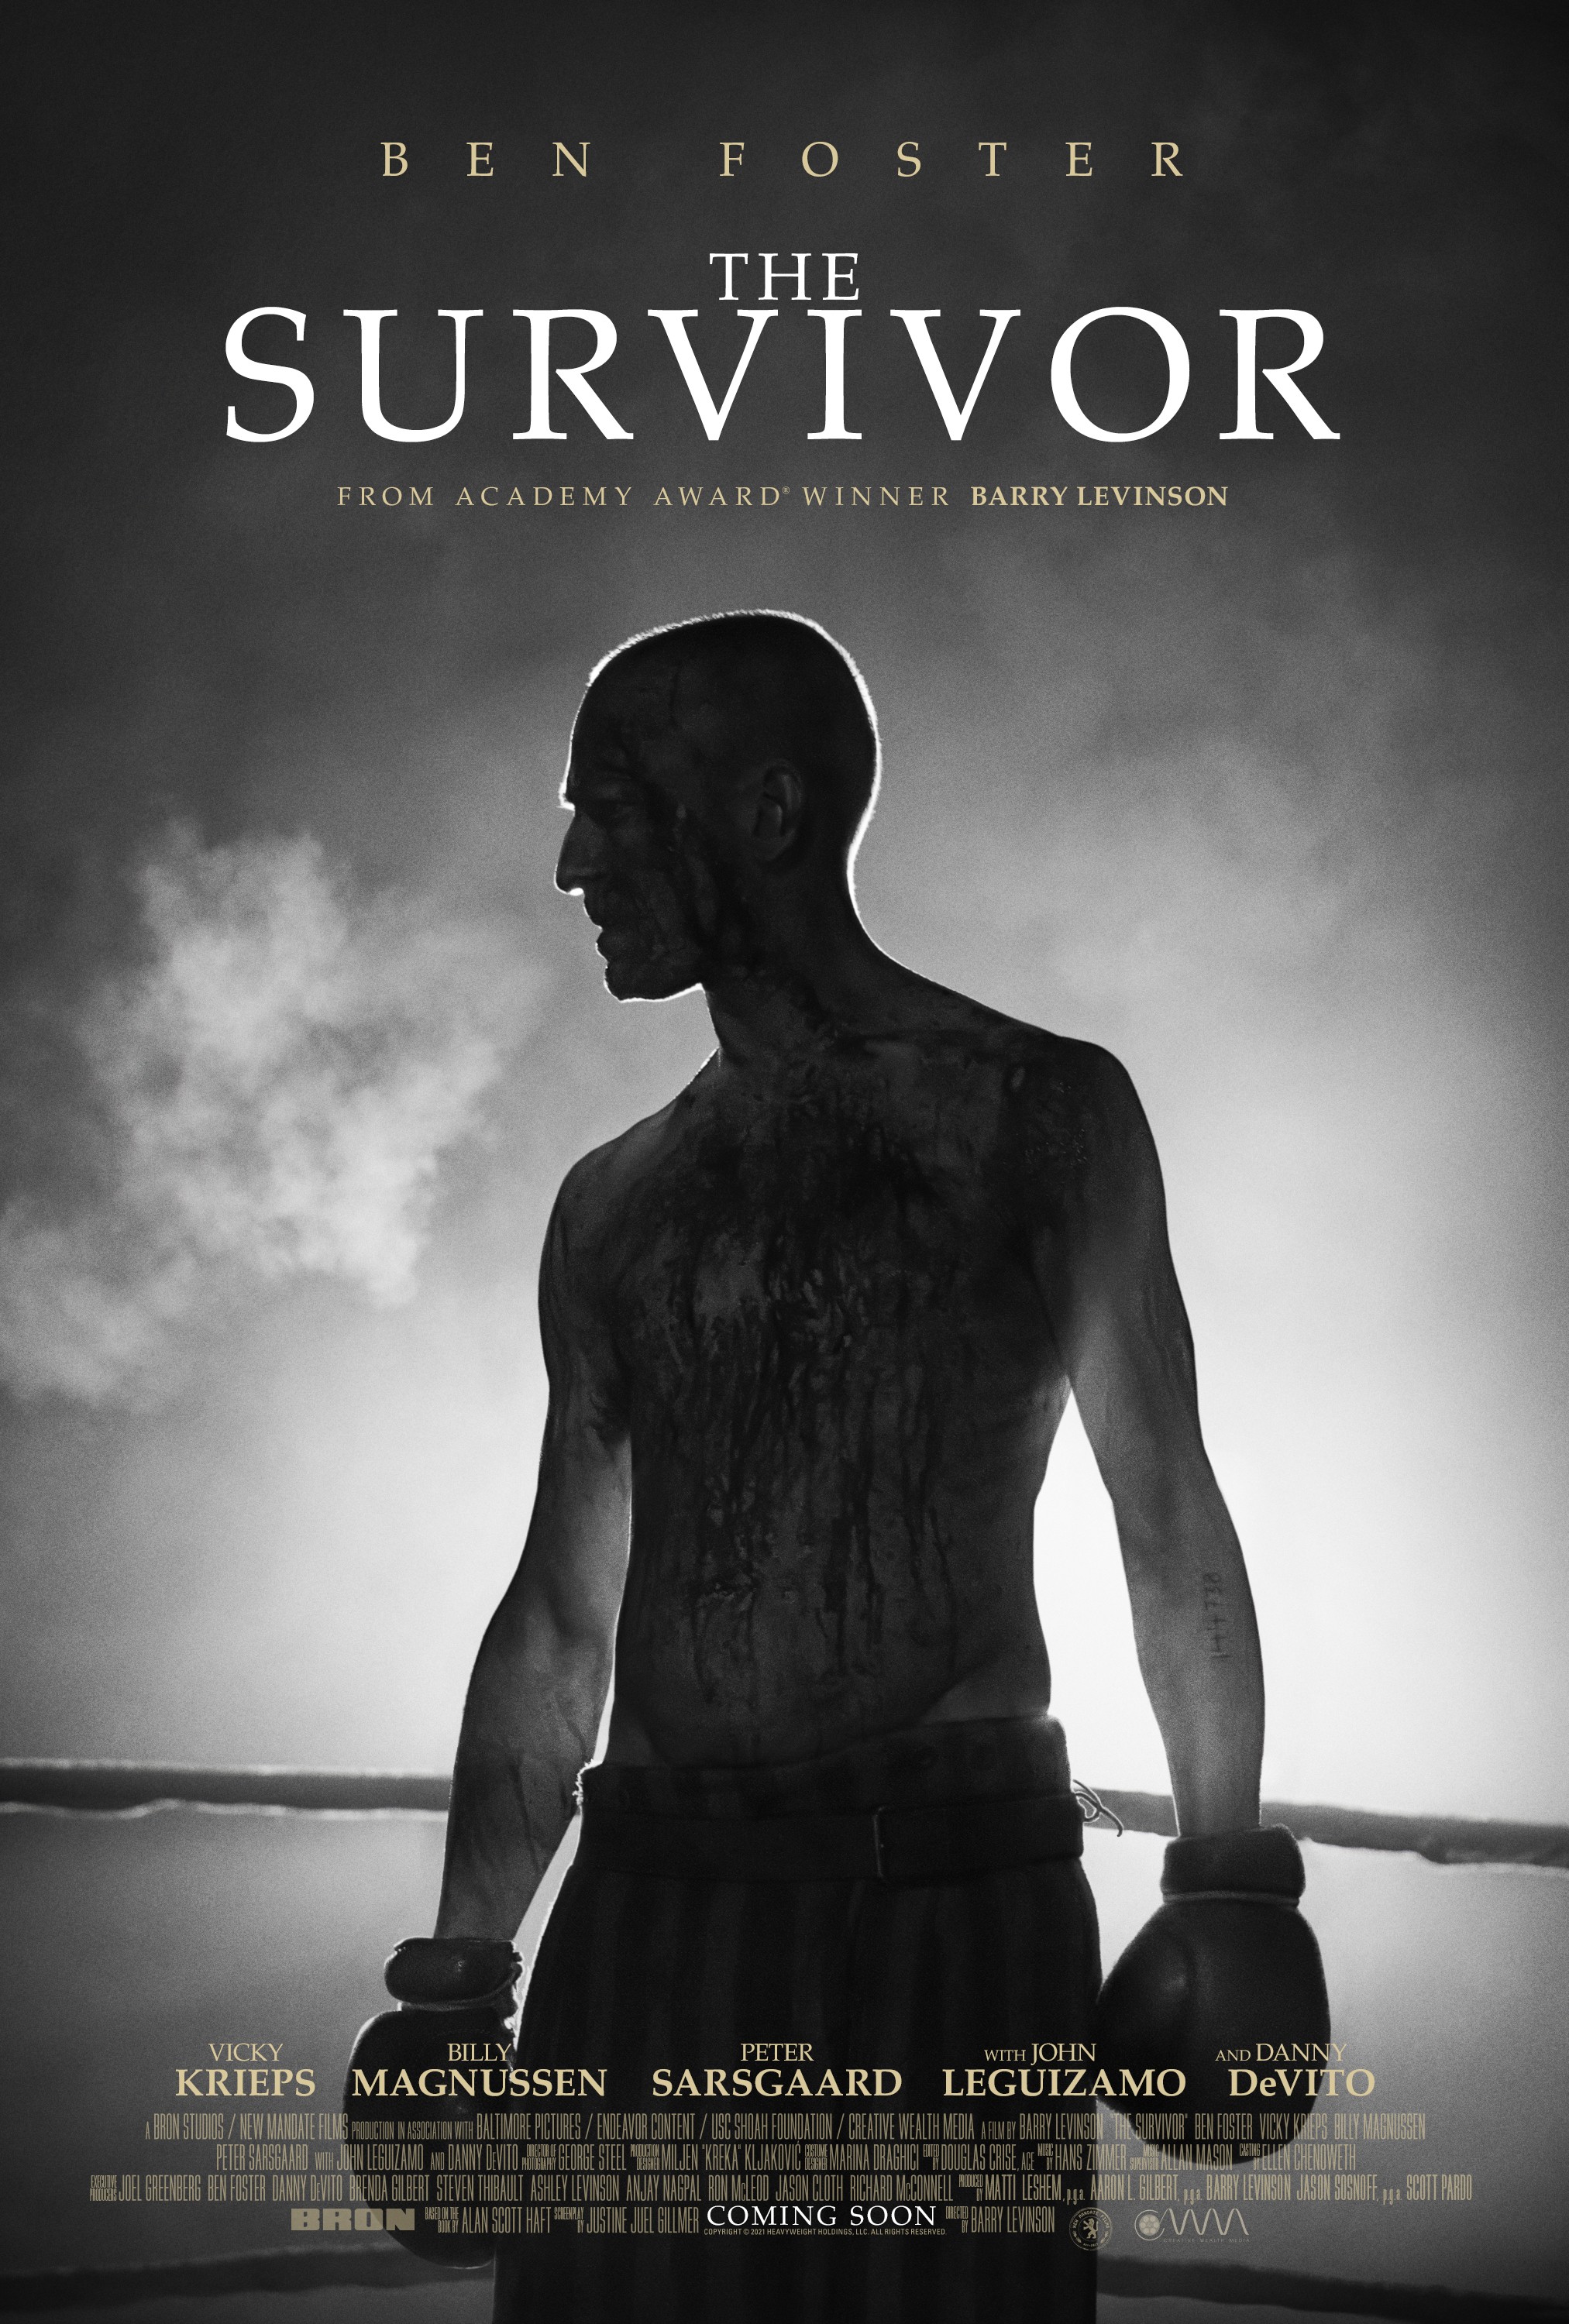 Movie Review - 'Lone Survivor' - : NPR